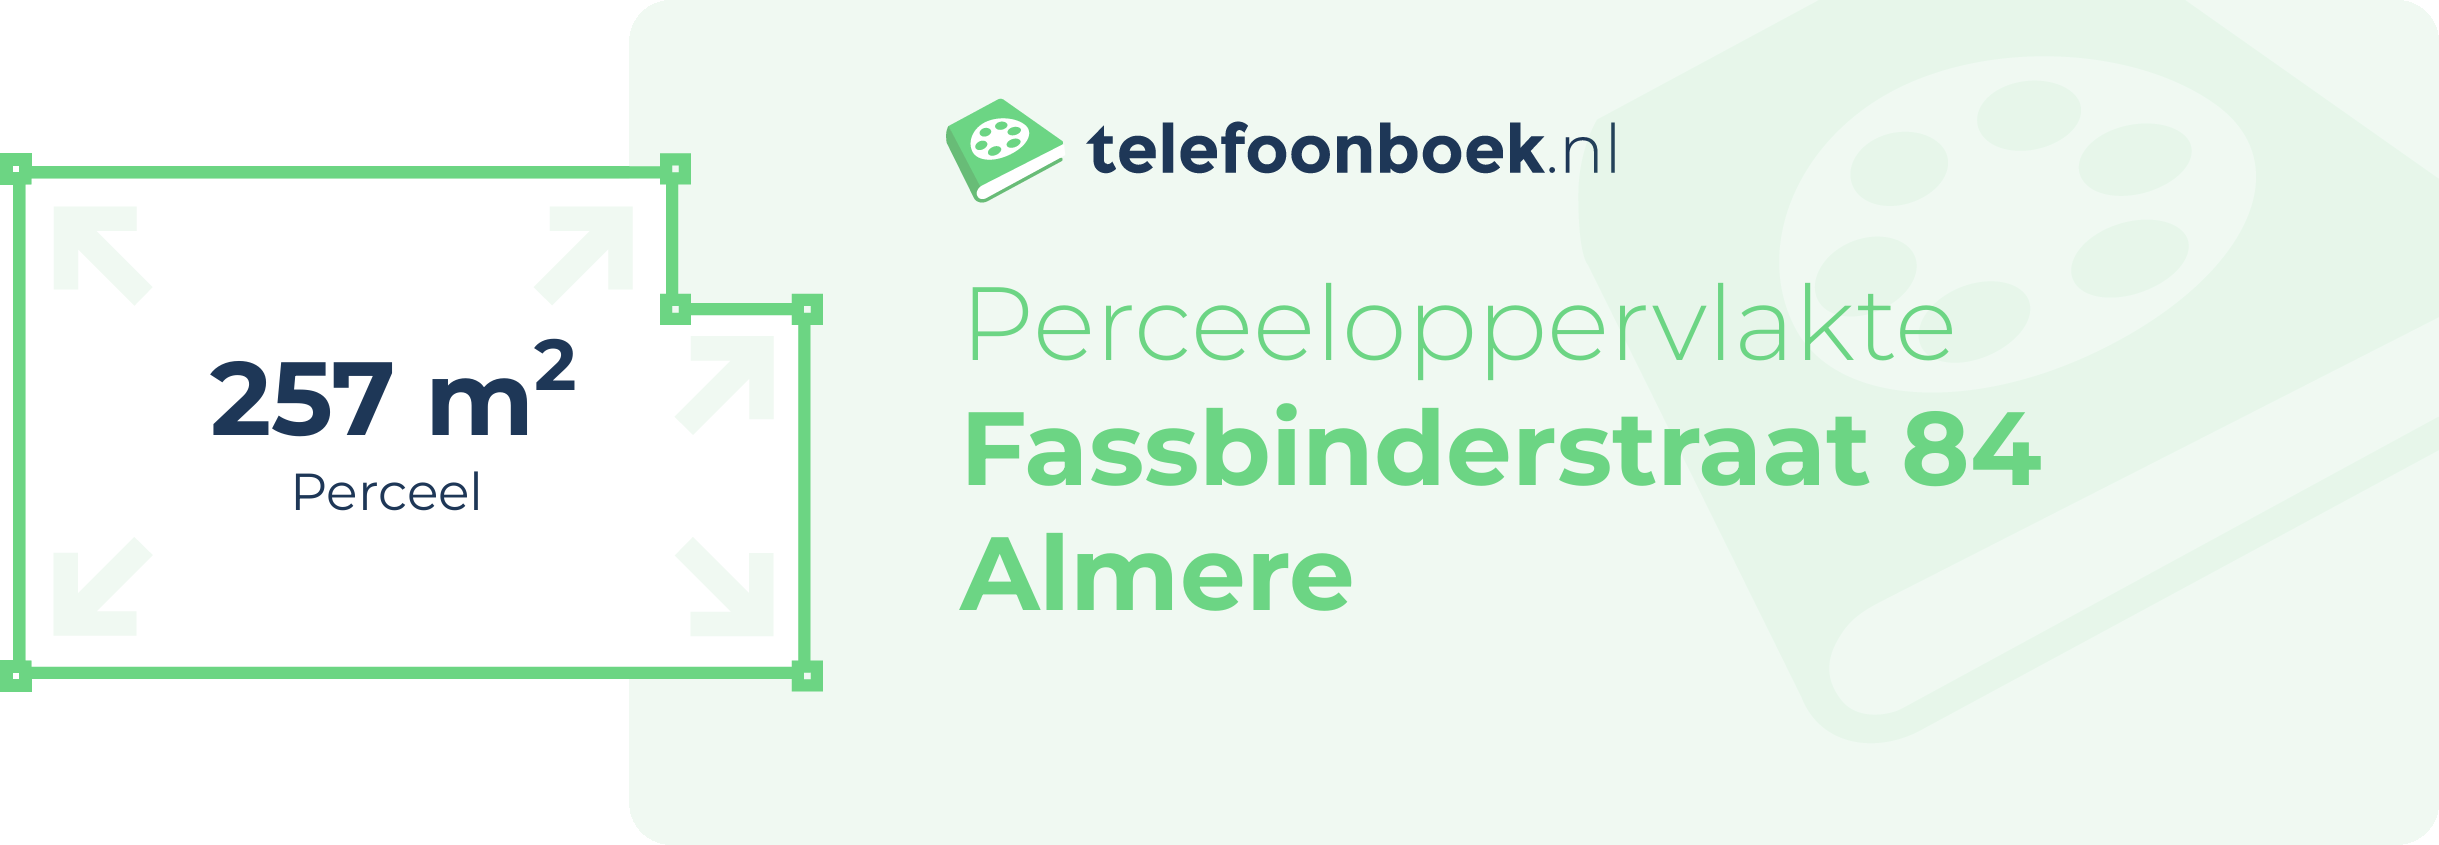 Perceeloppervlakte Fassbinderstraat 84 Almere